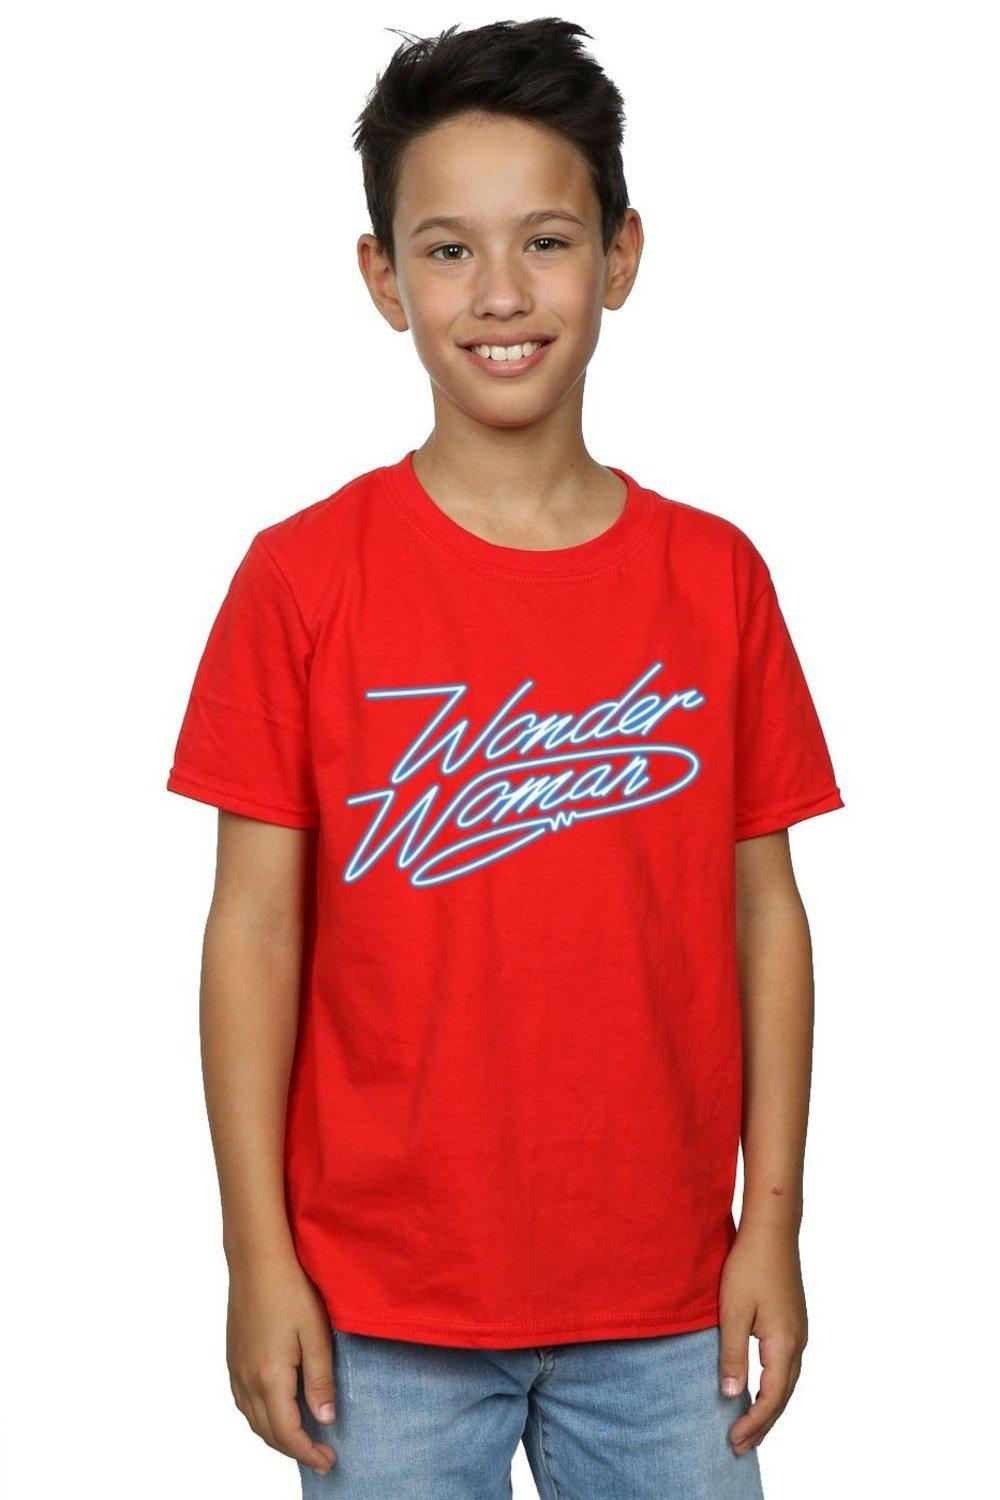 Wonder Woman 84 Neon Wonder Woman T-Shirt